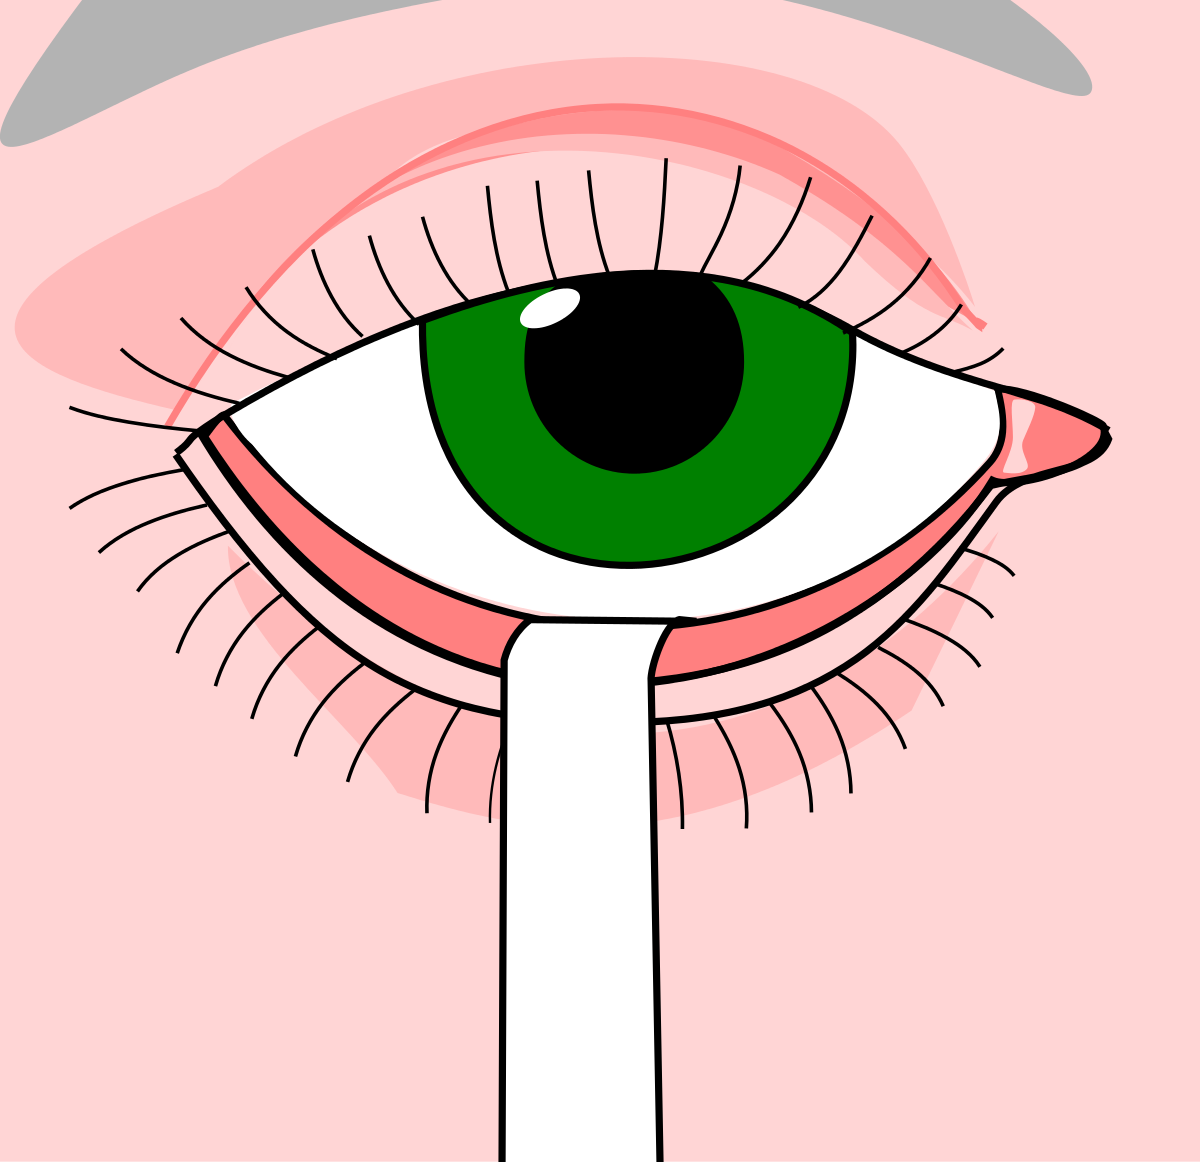 DIAGNOSTICS Both Eye Schirmer's test